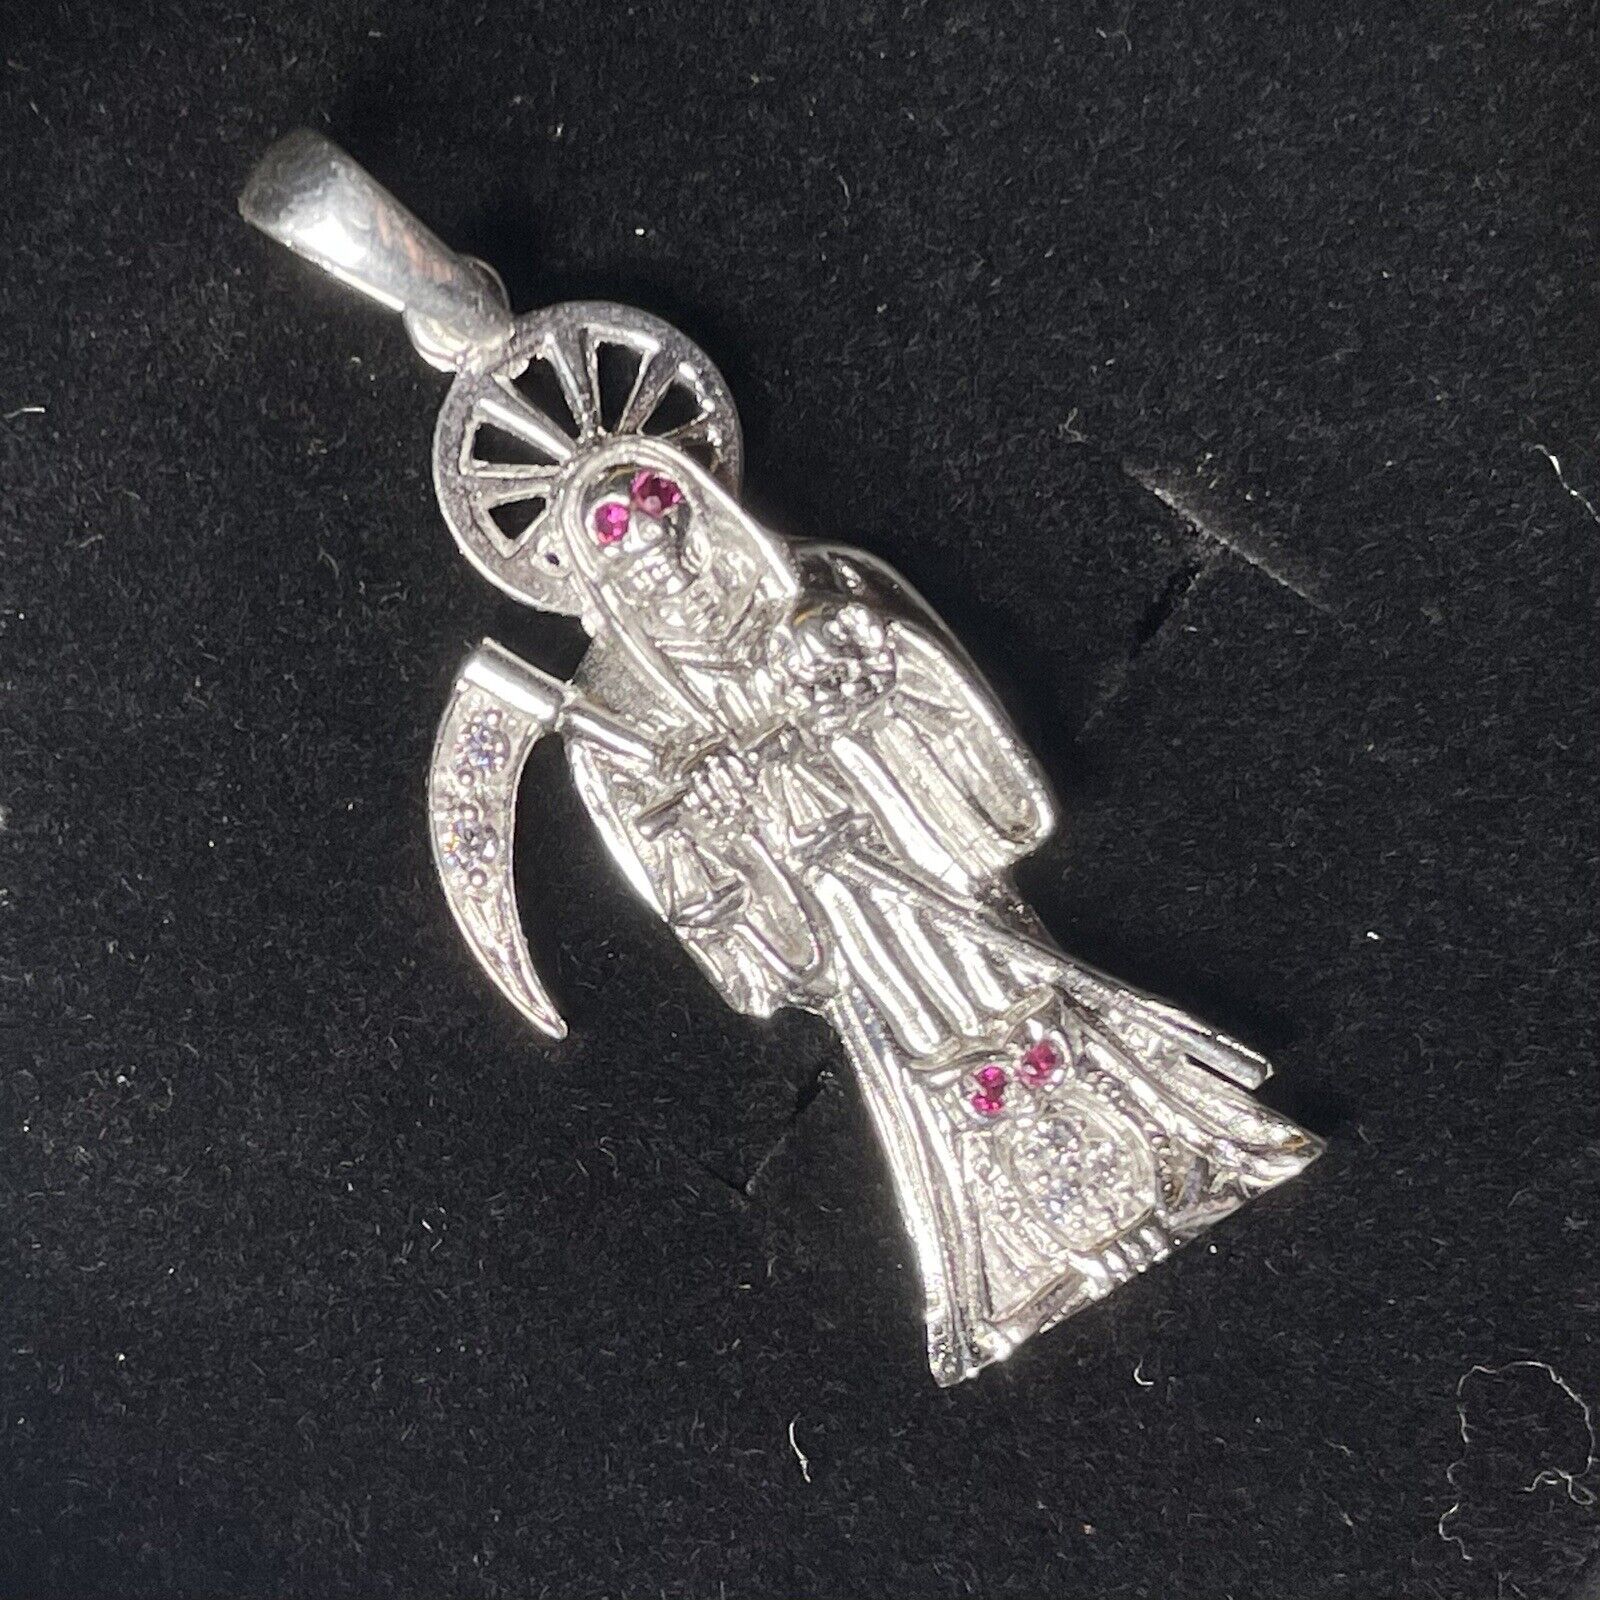 Real Solid 925 Sterling Silver Small Grim Reaper / Santa Muerte Pendant / Charm